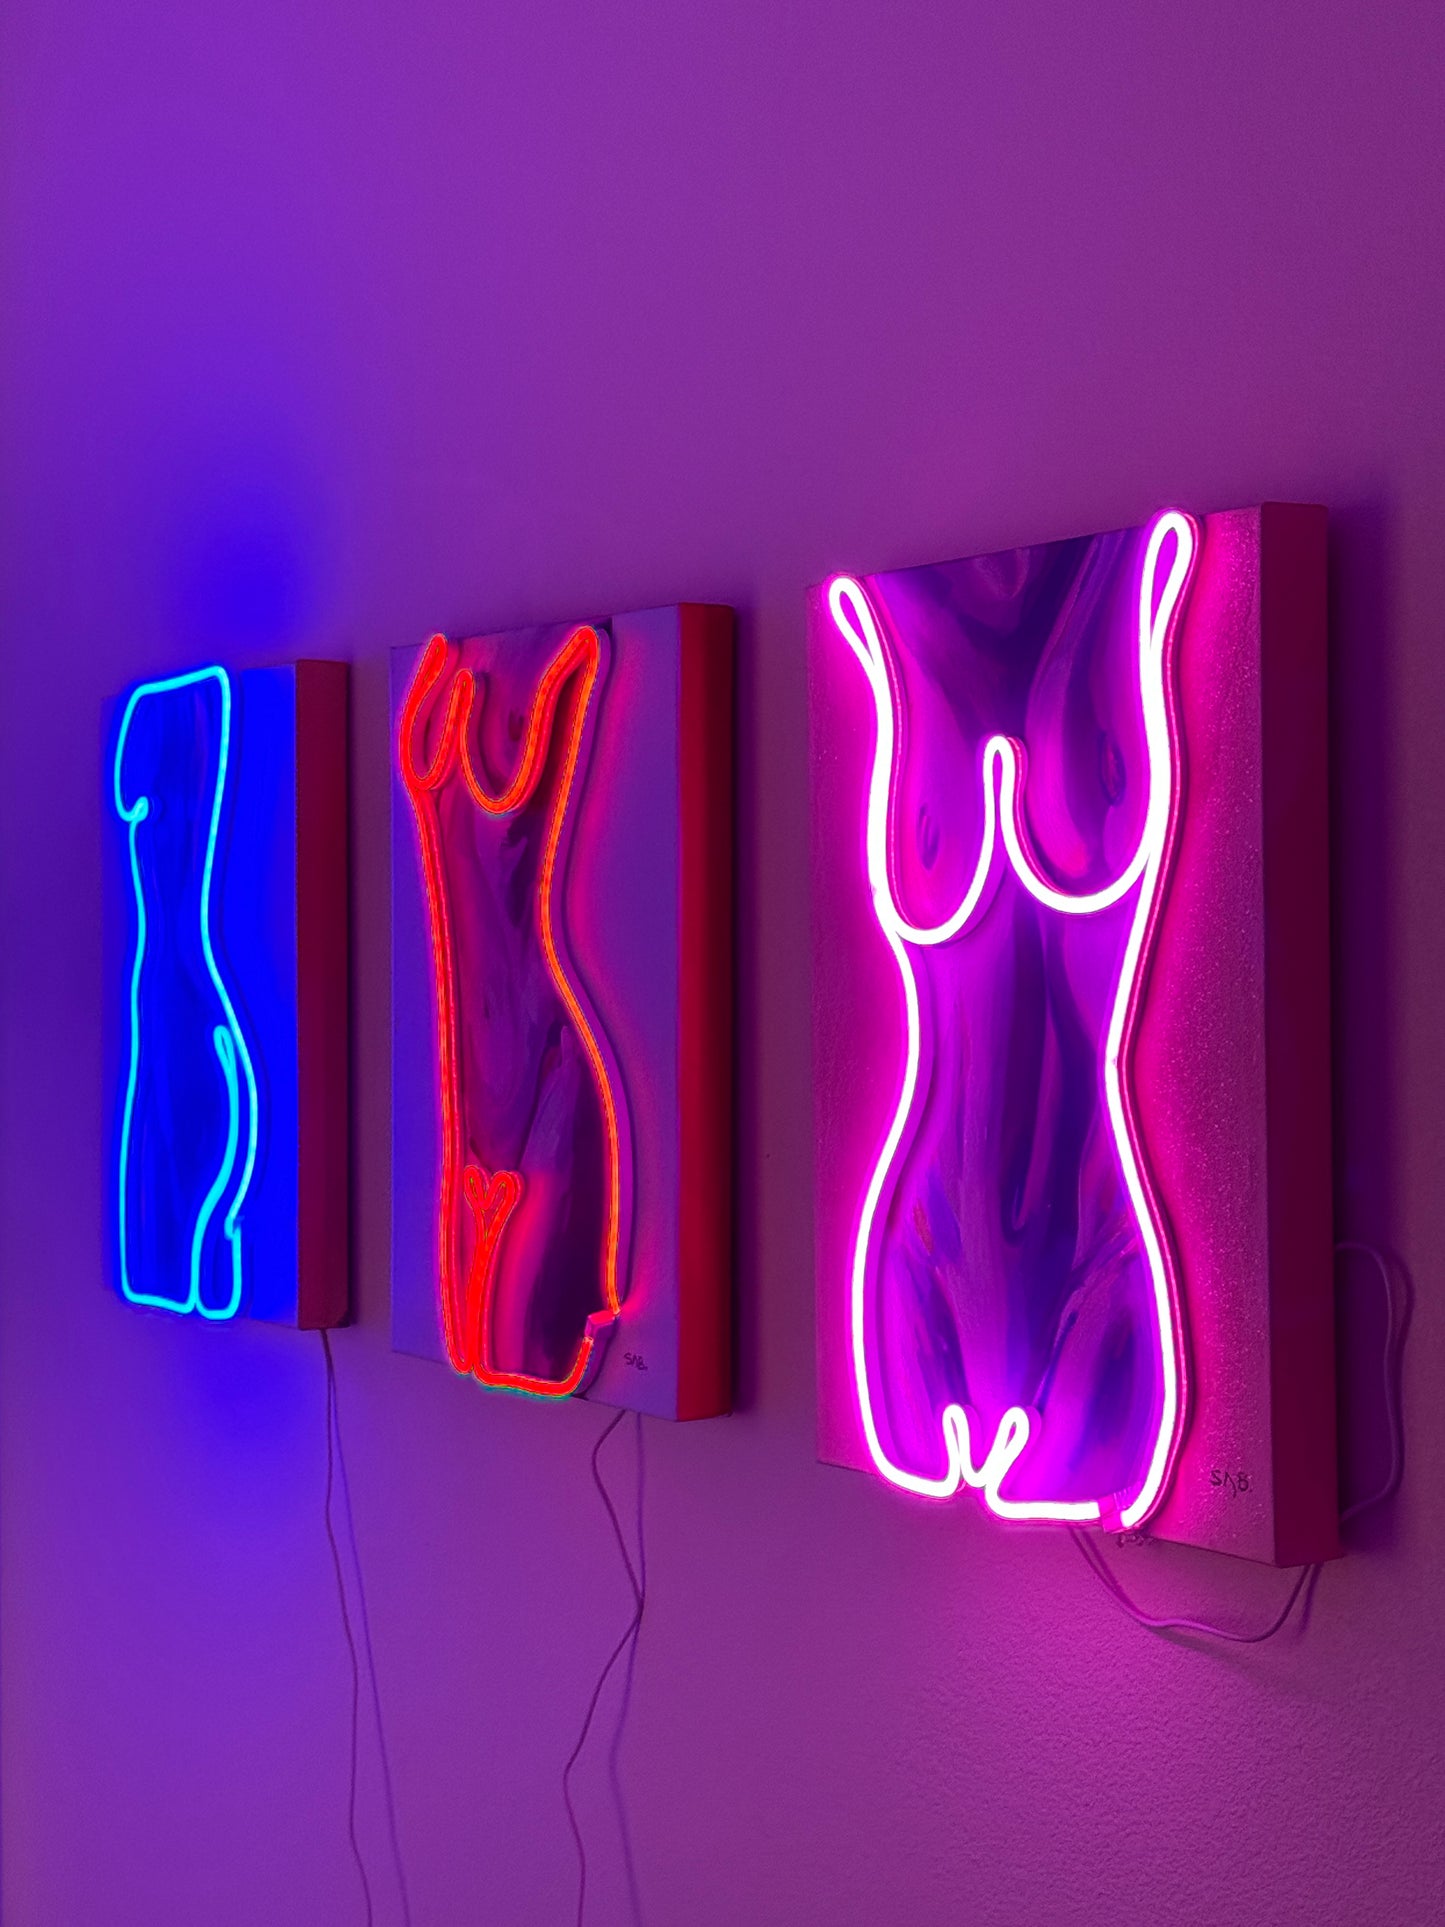 Neon Body Painting 14x17 canvas acrylic